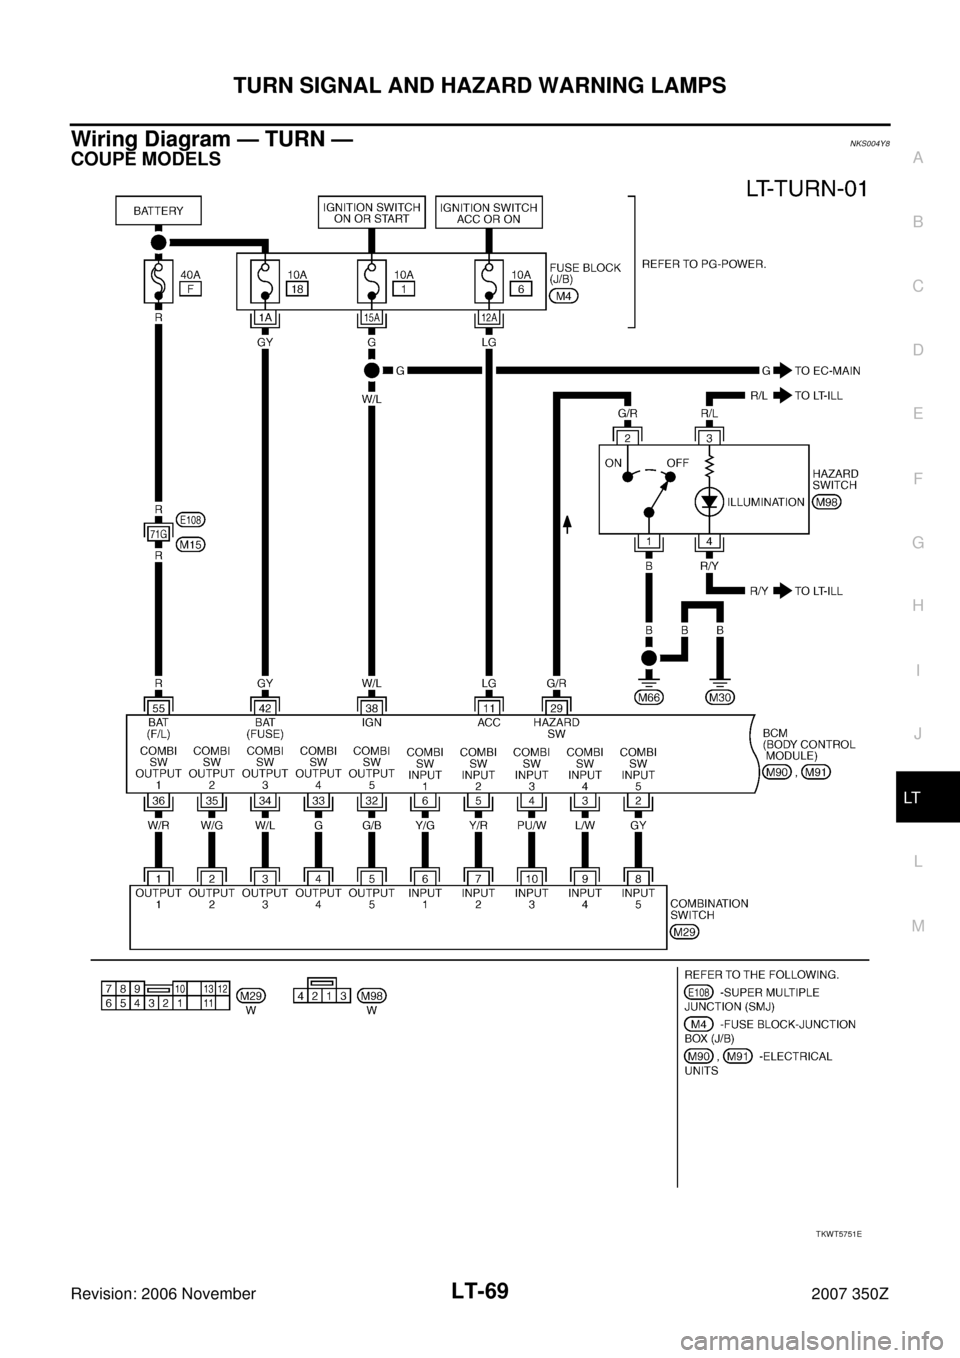 NISSAN 350Z 2007 Z33 Lighting System Repair Manual TURN SIGNAL AND HAZARD WARNING LAMPS
LT-69
C
D
E
F
G
H
I
J
L
MA
B
LT
Revision: 2006 November2007 350Z
Wiring Diagram — TURN — NKS004Y8
COUPE MODELS
TKWT5751E 